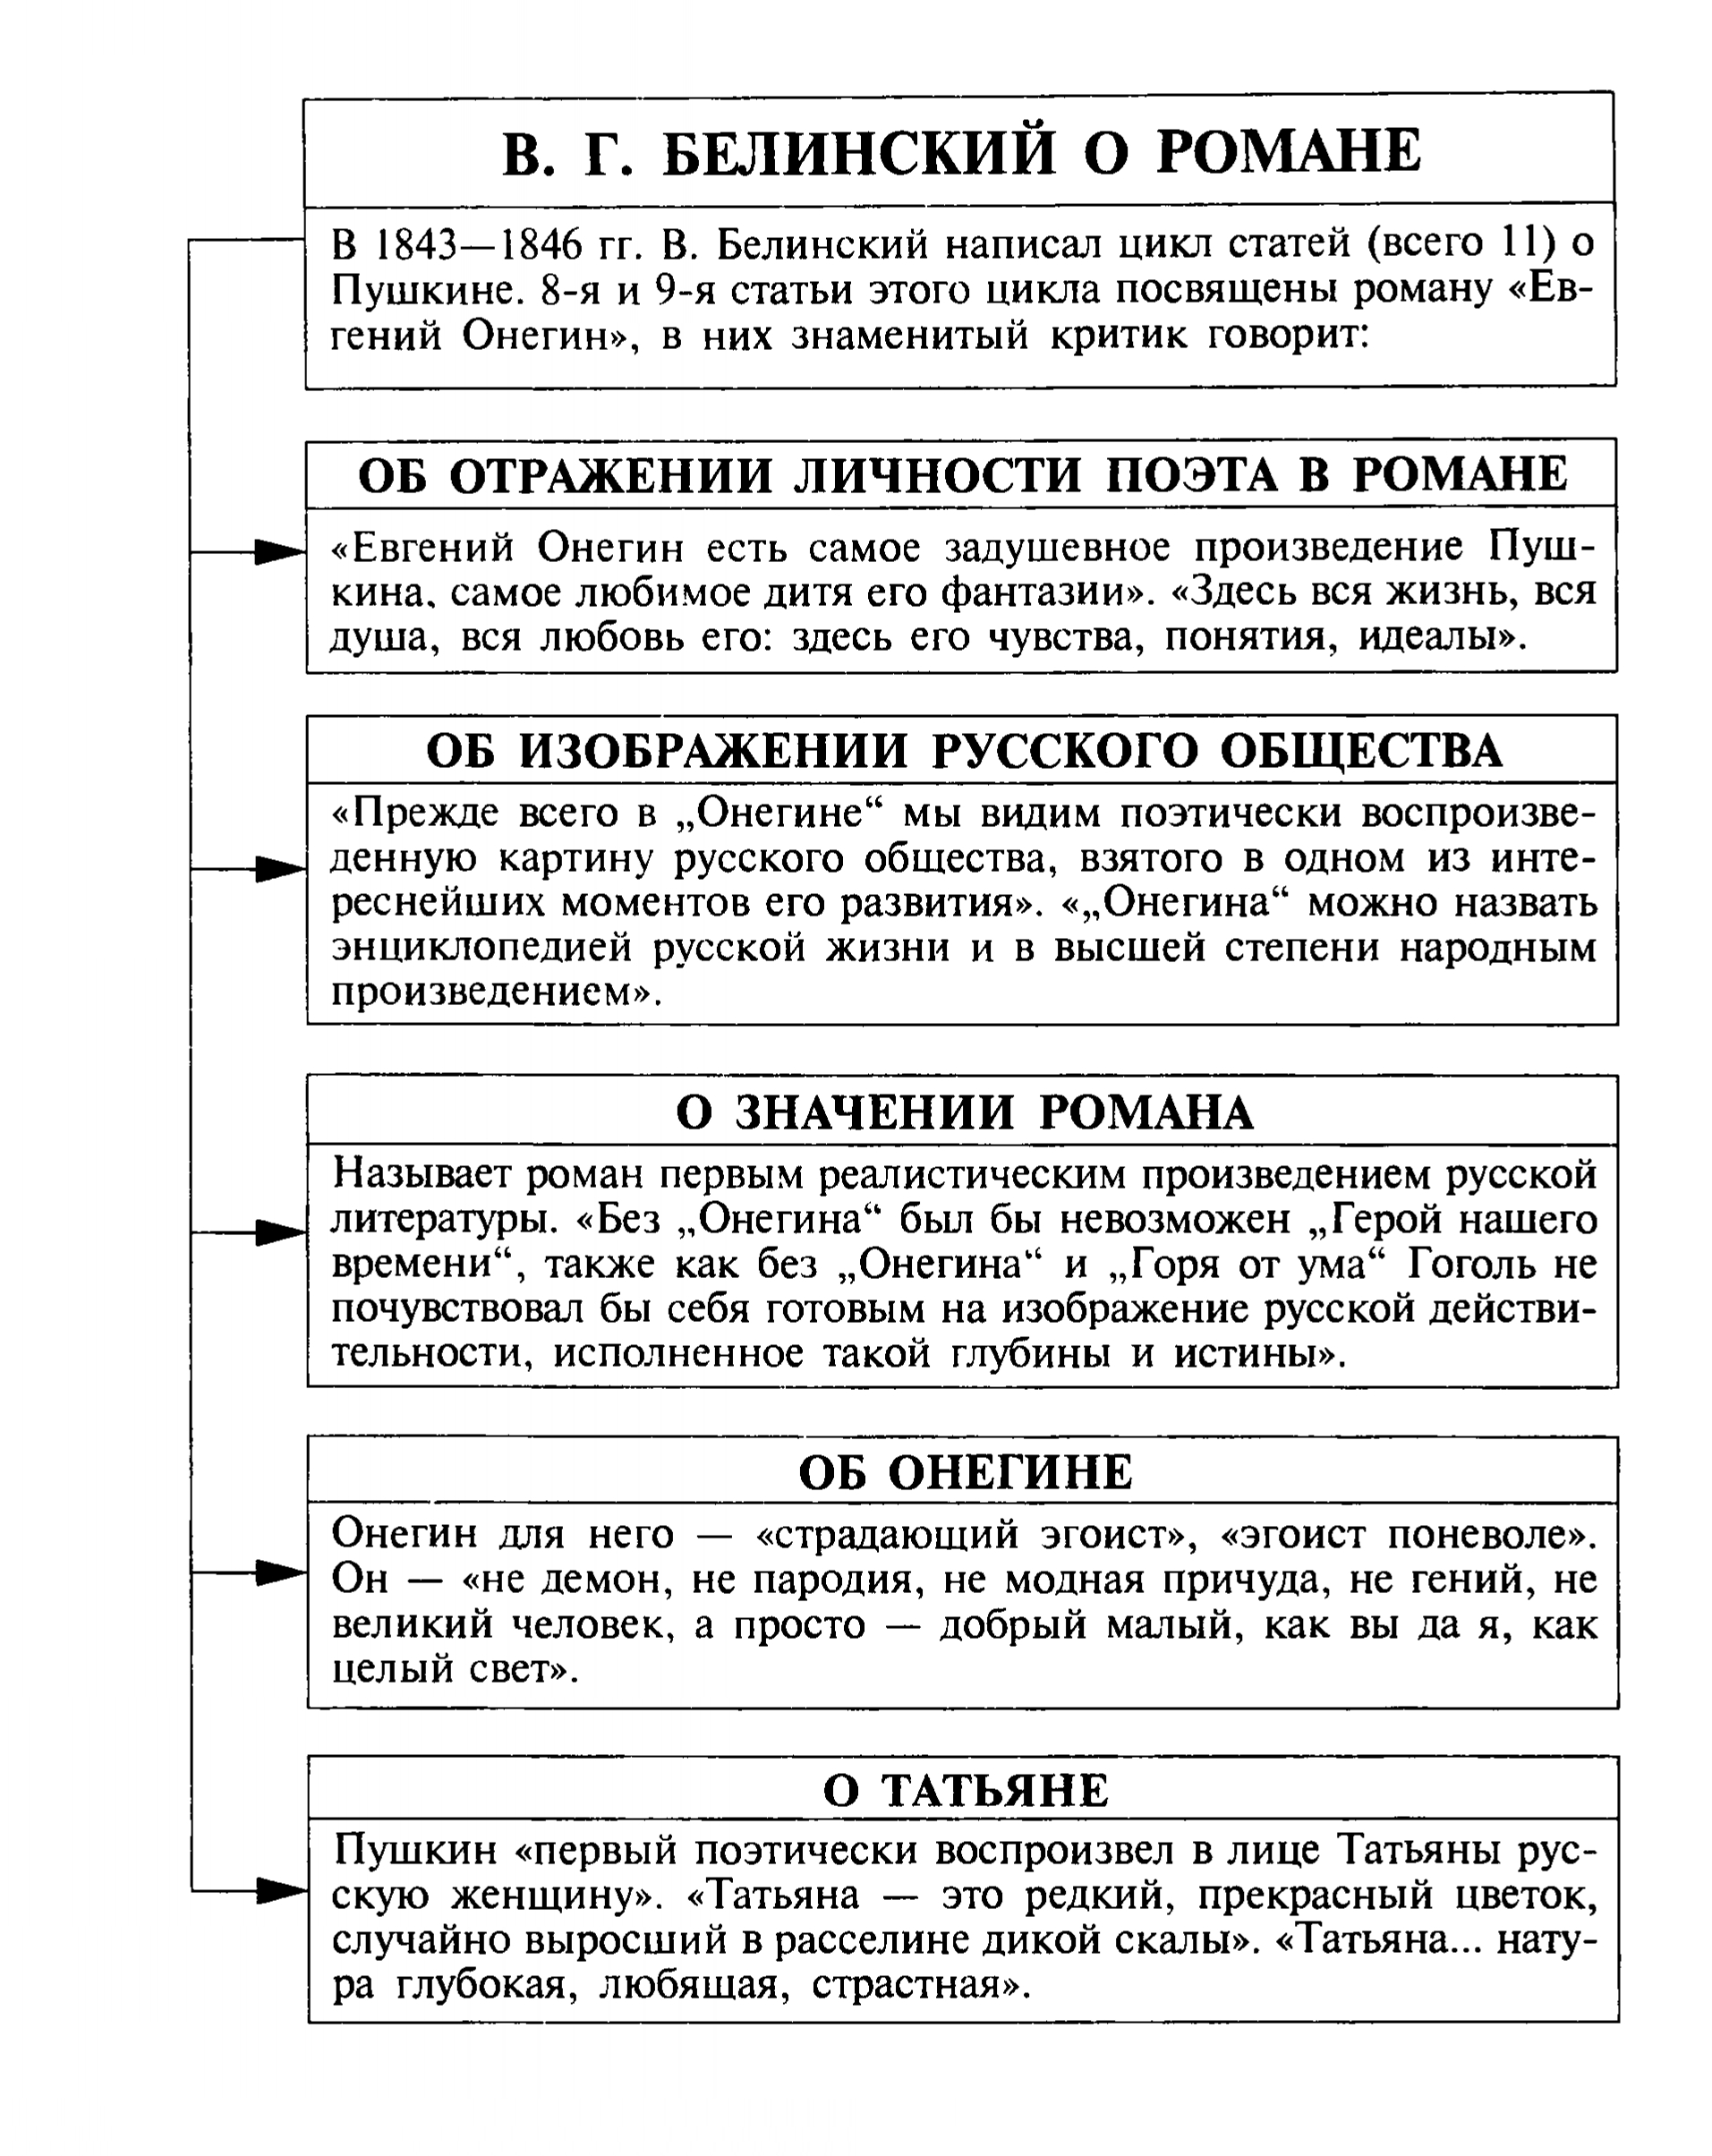 В.Г. Белинский о романе (таблица)